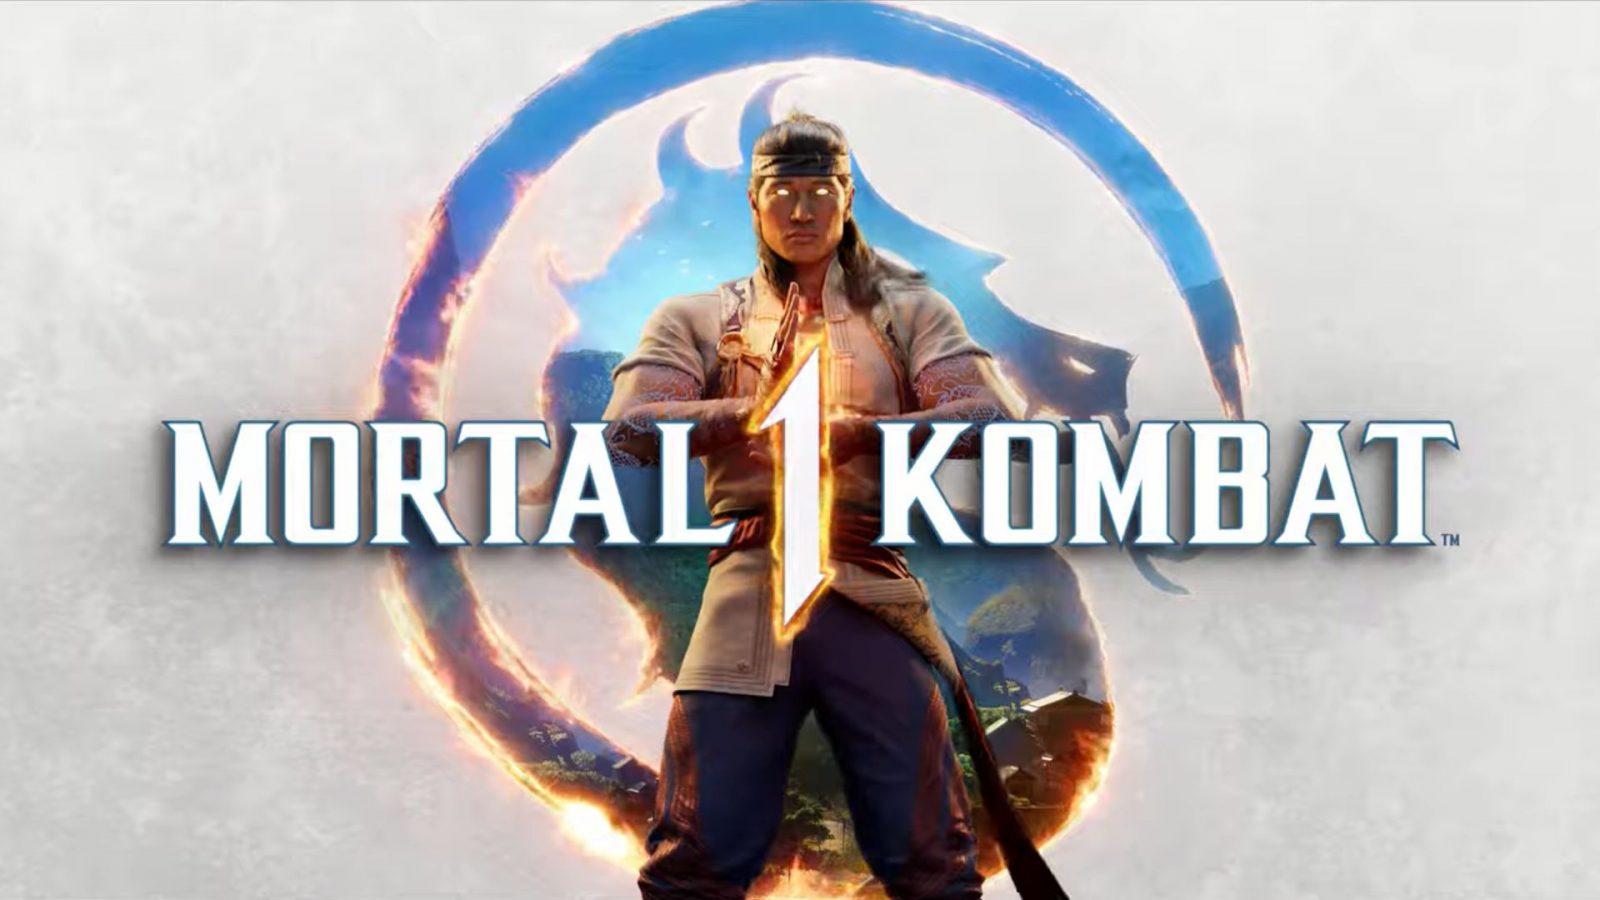 Mortal Kombat 1 – Invasions Season 3 Trailer 